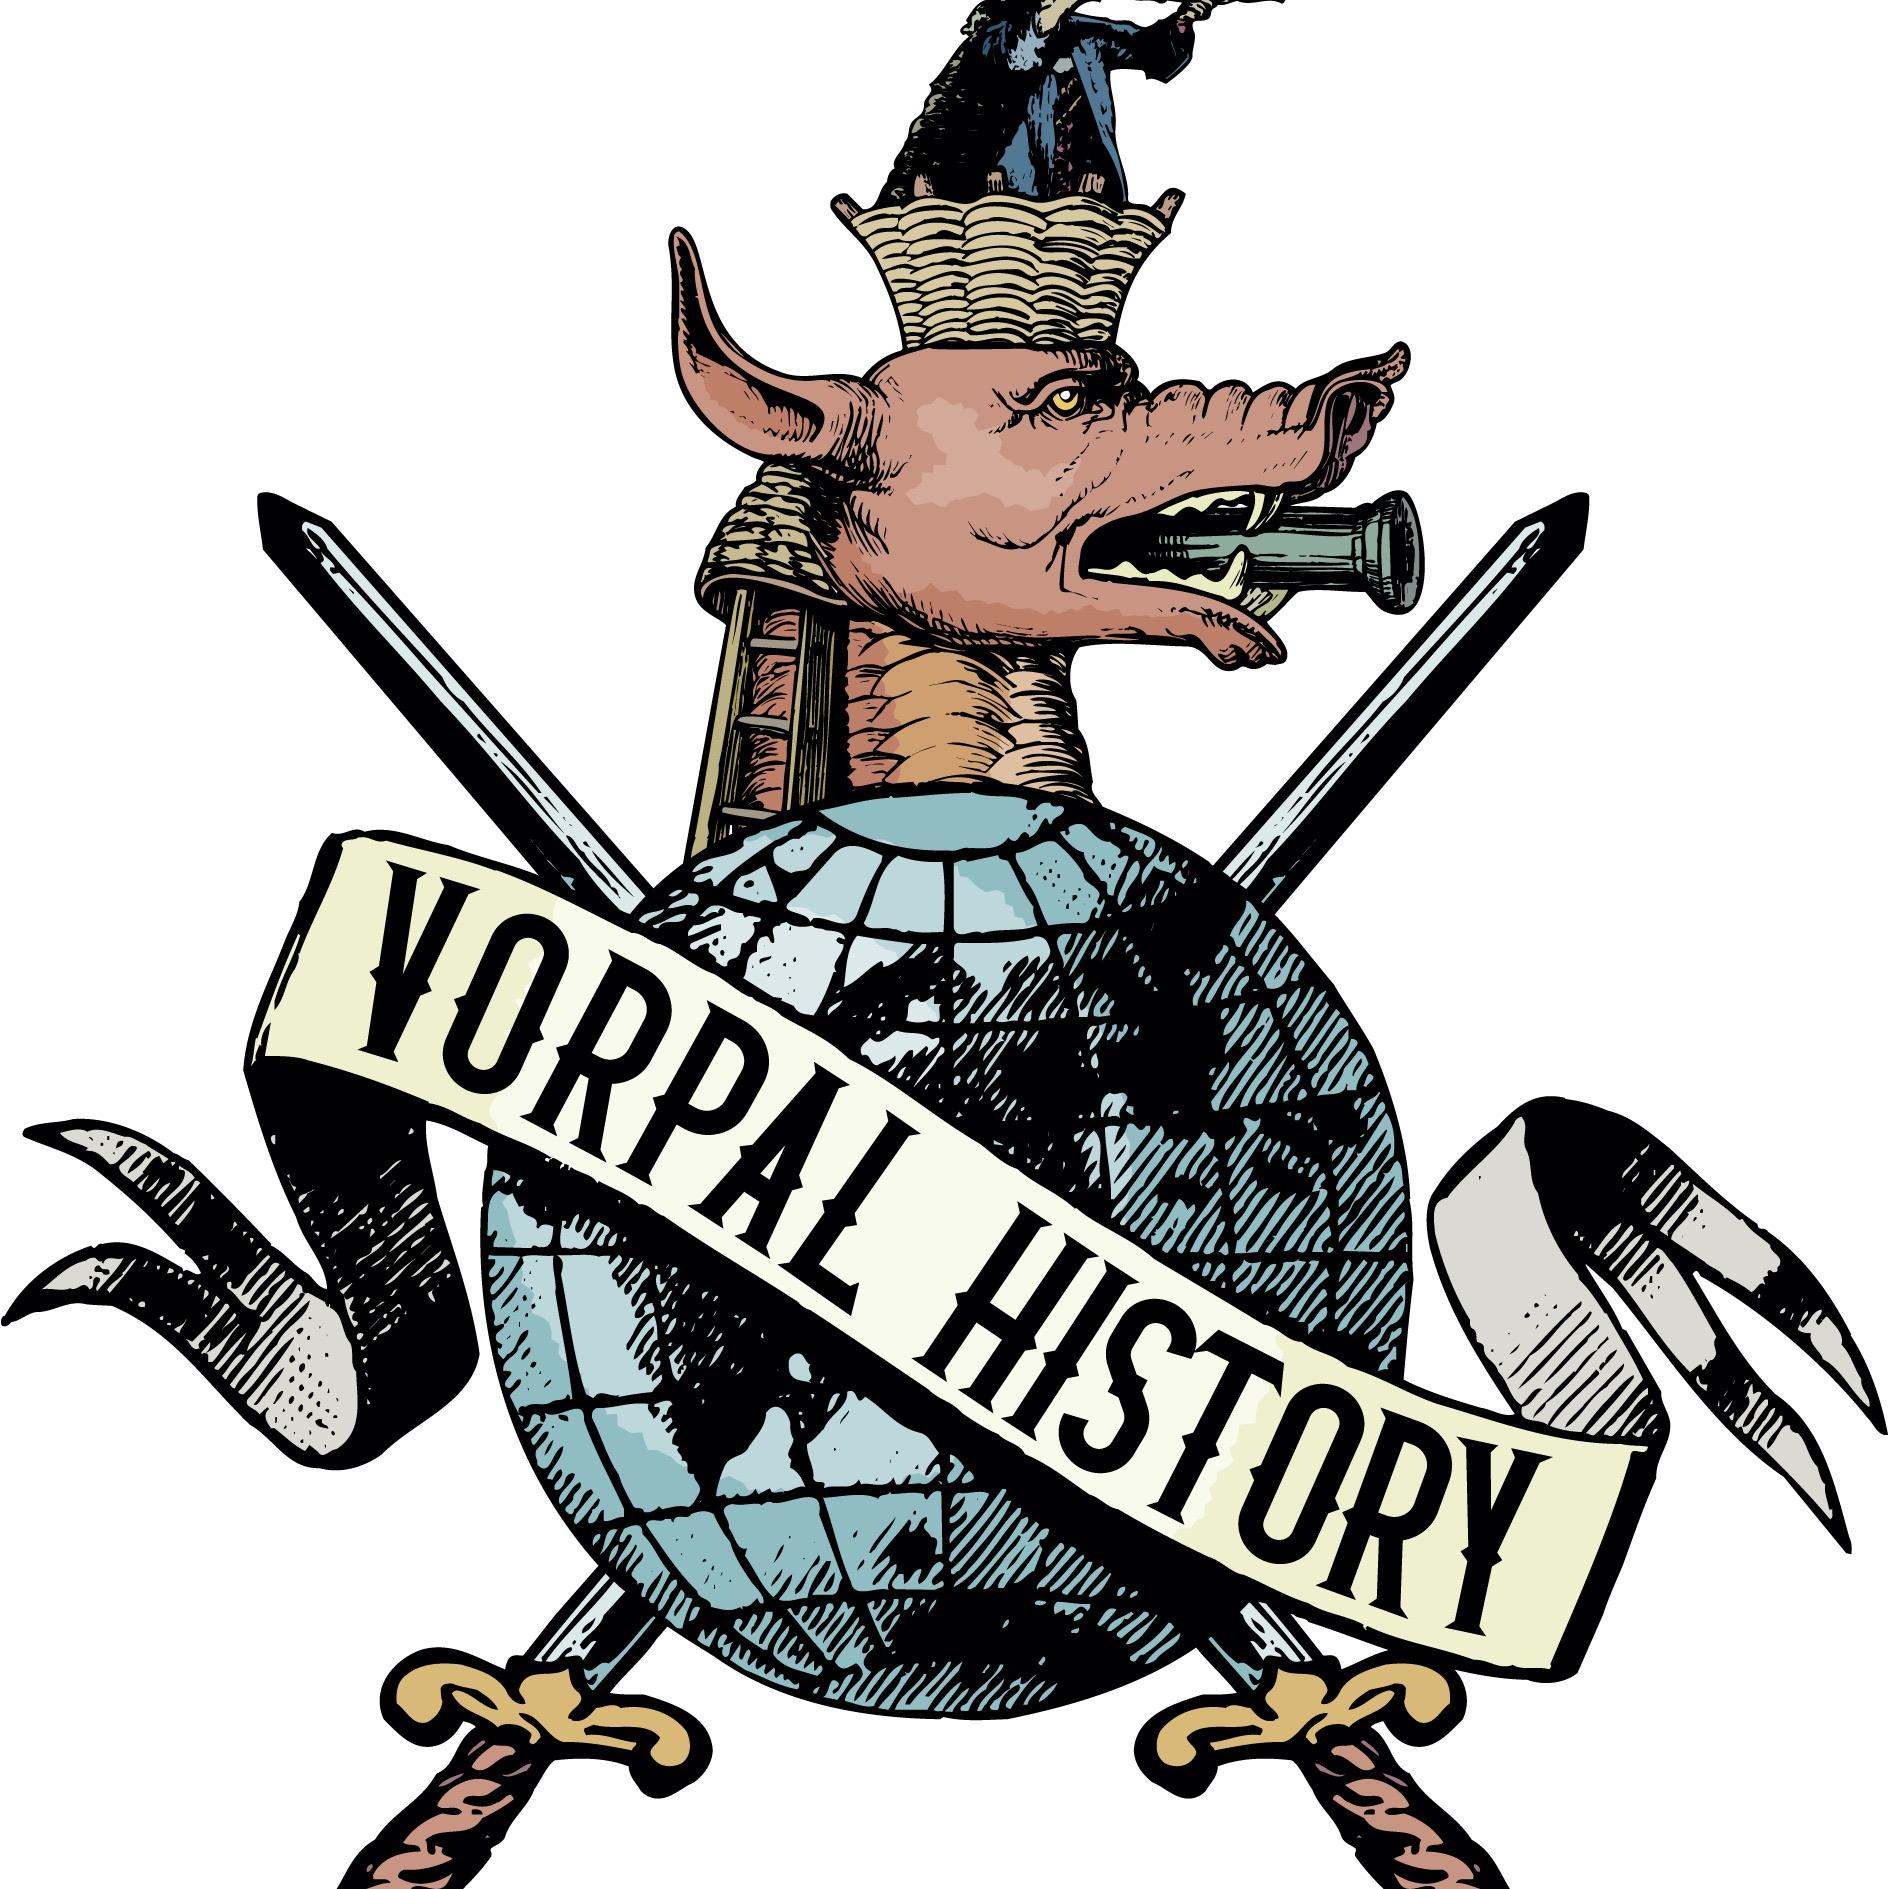 Vorpal History